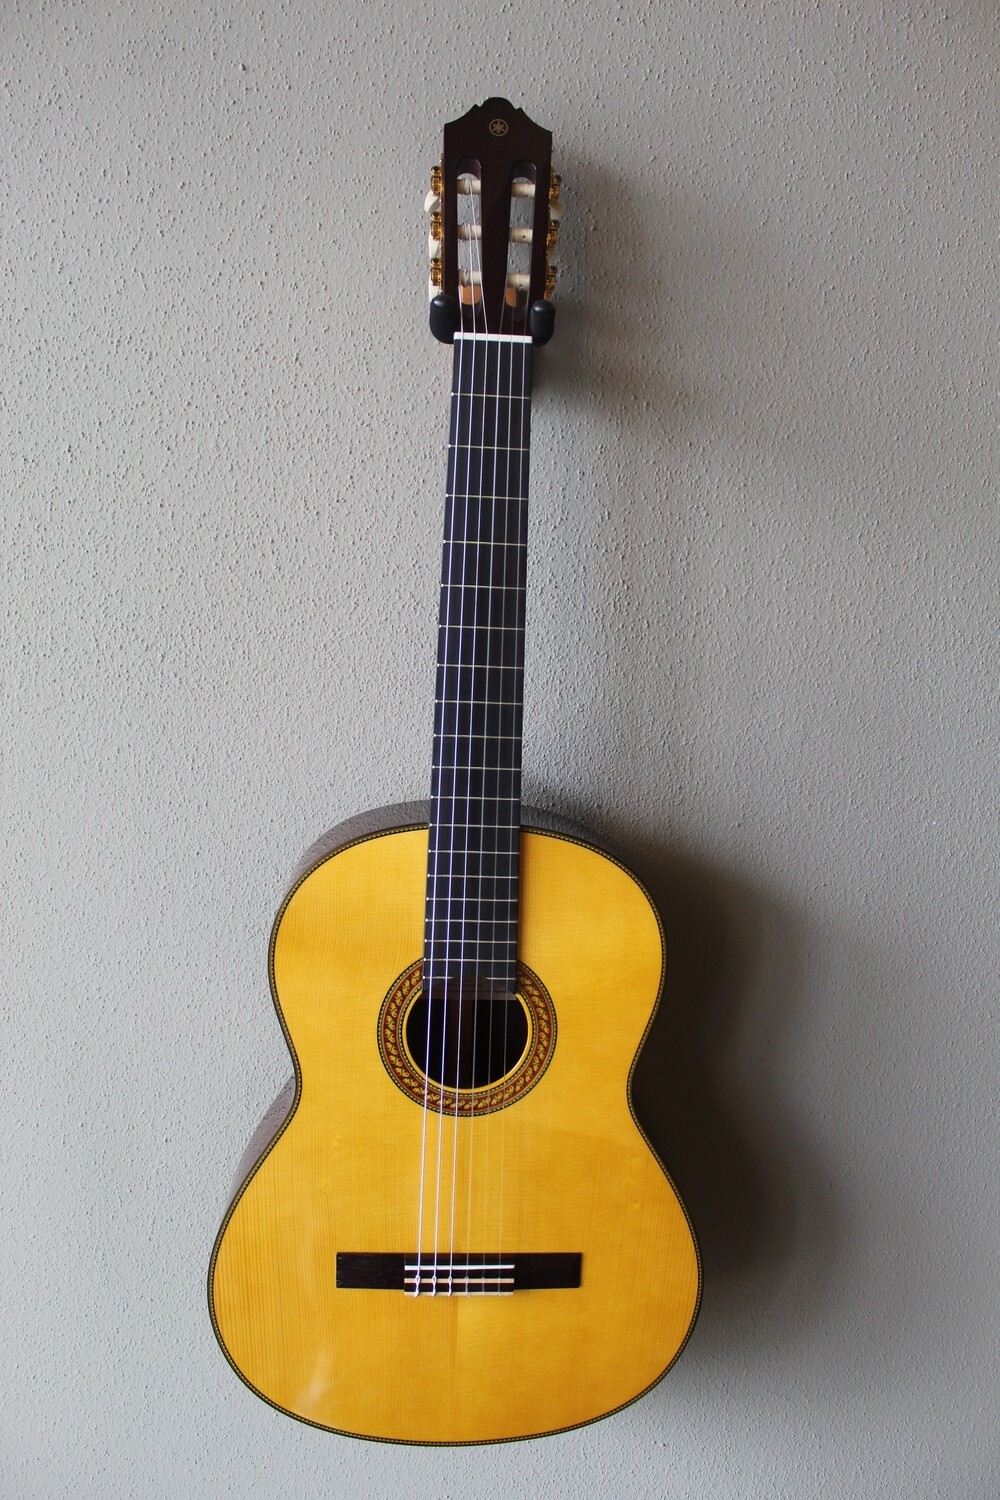 Yamaha CG192S Spruce Top Classical Guitar with Gig Bag